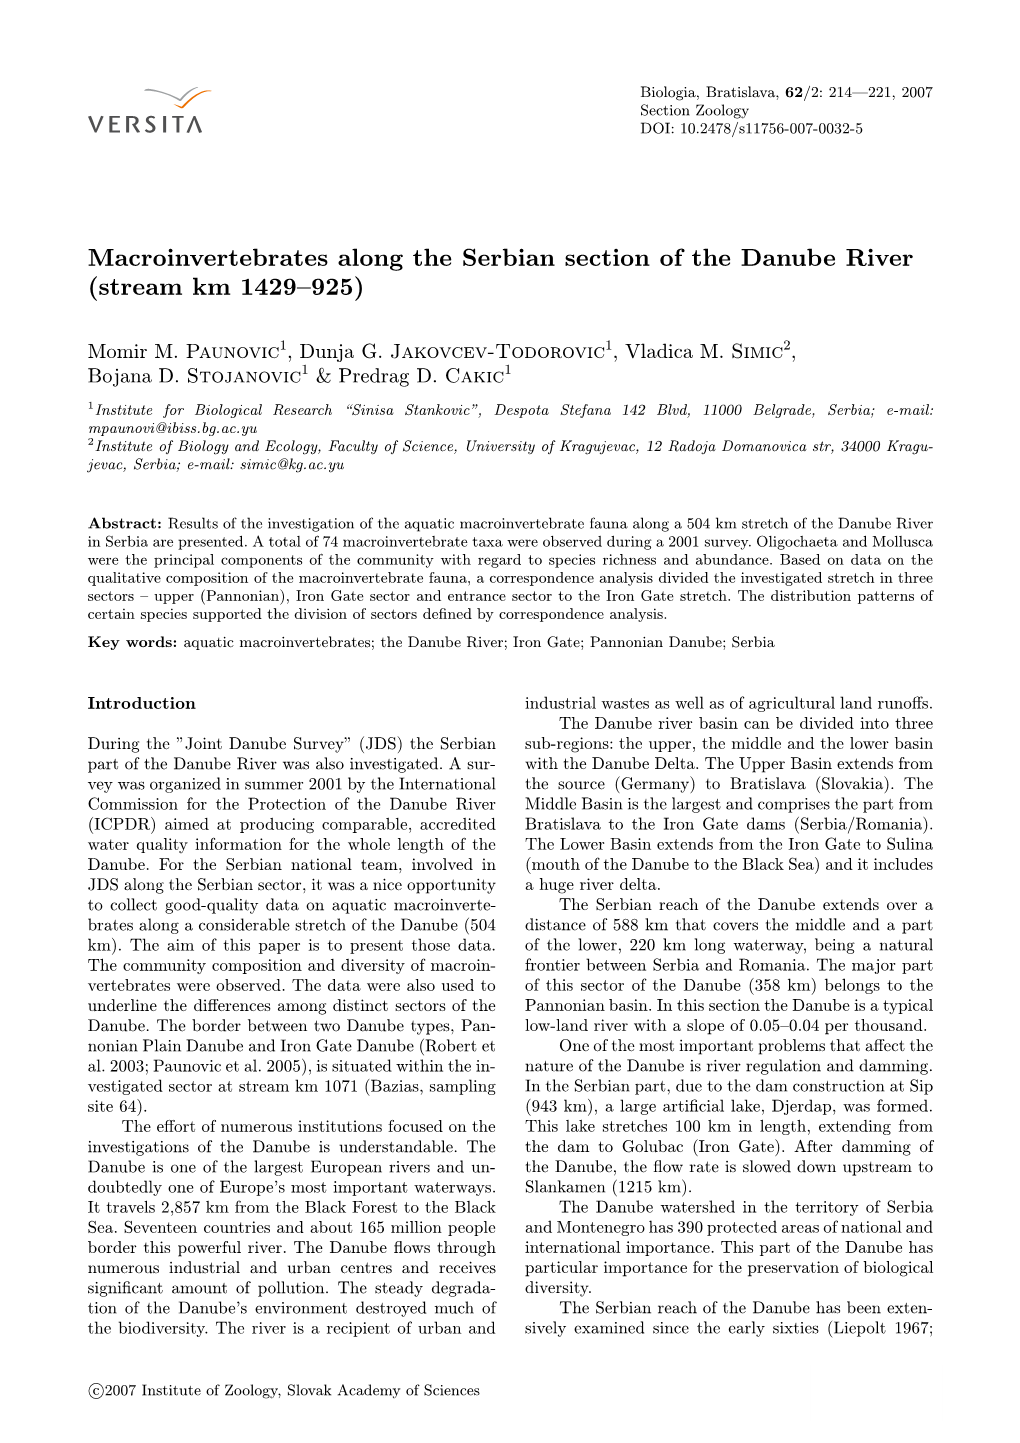 Macroinvertebrates Along the Serbian Section of the Danube River (Stream Km 1429–925)